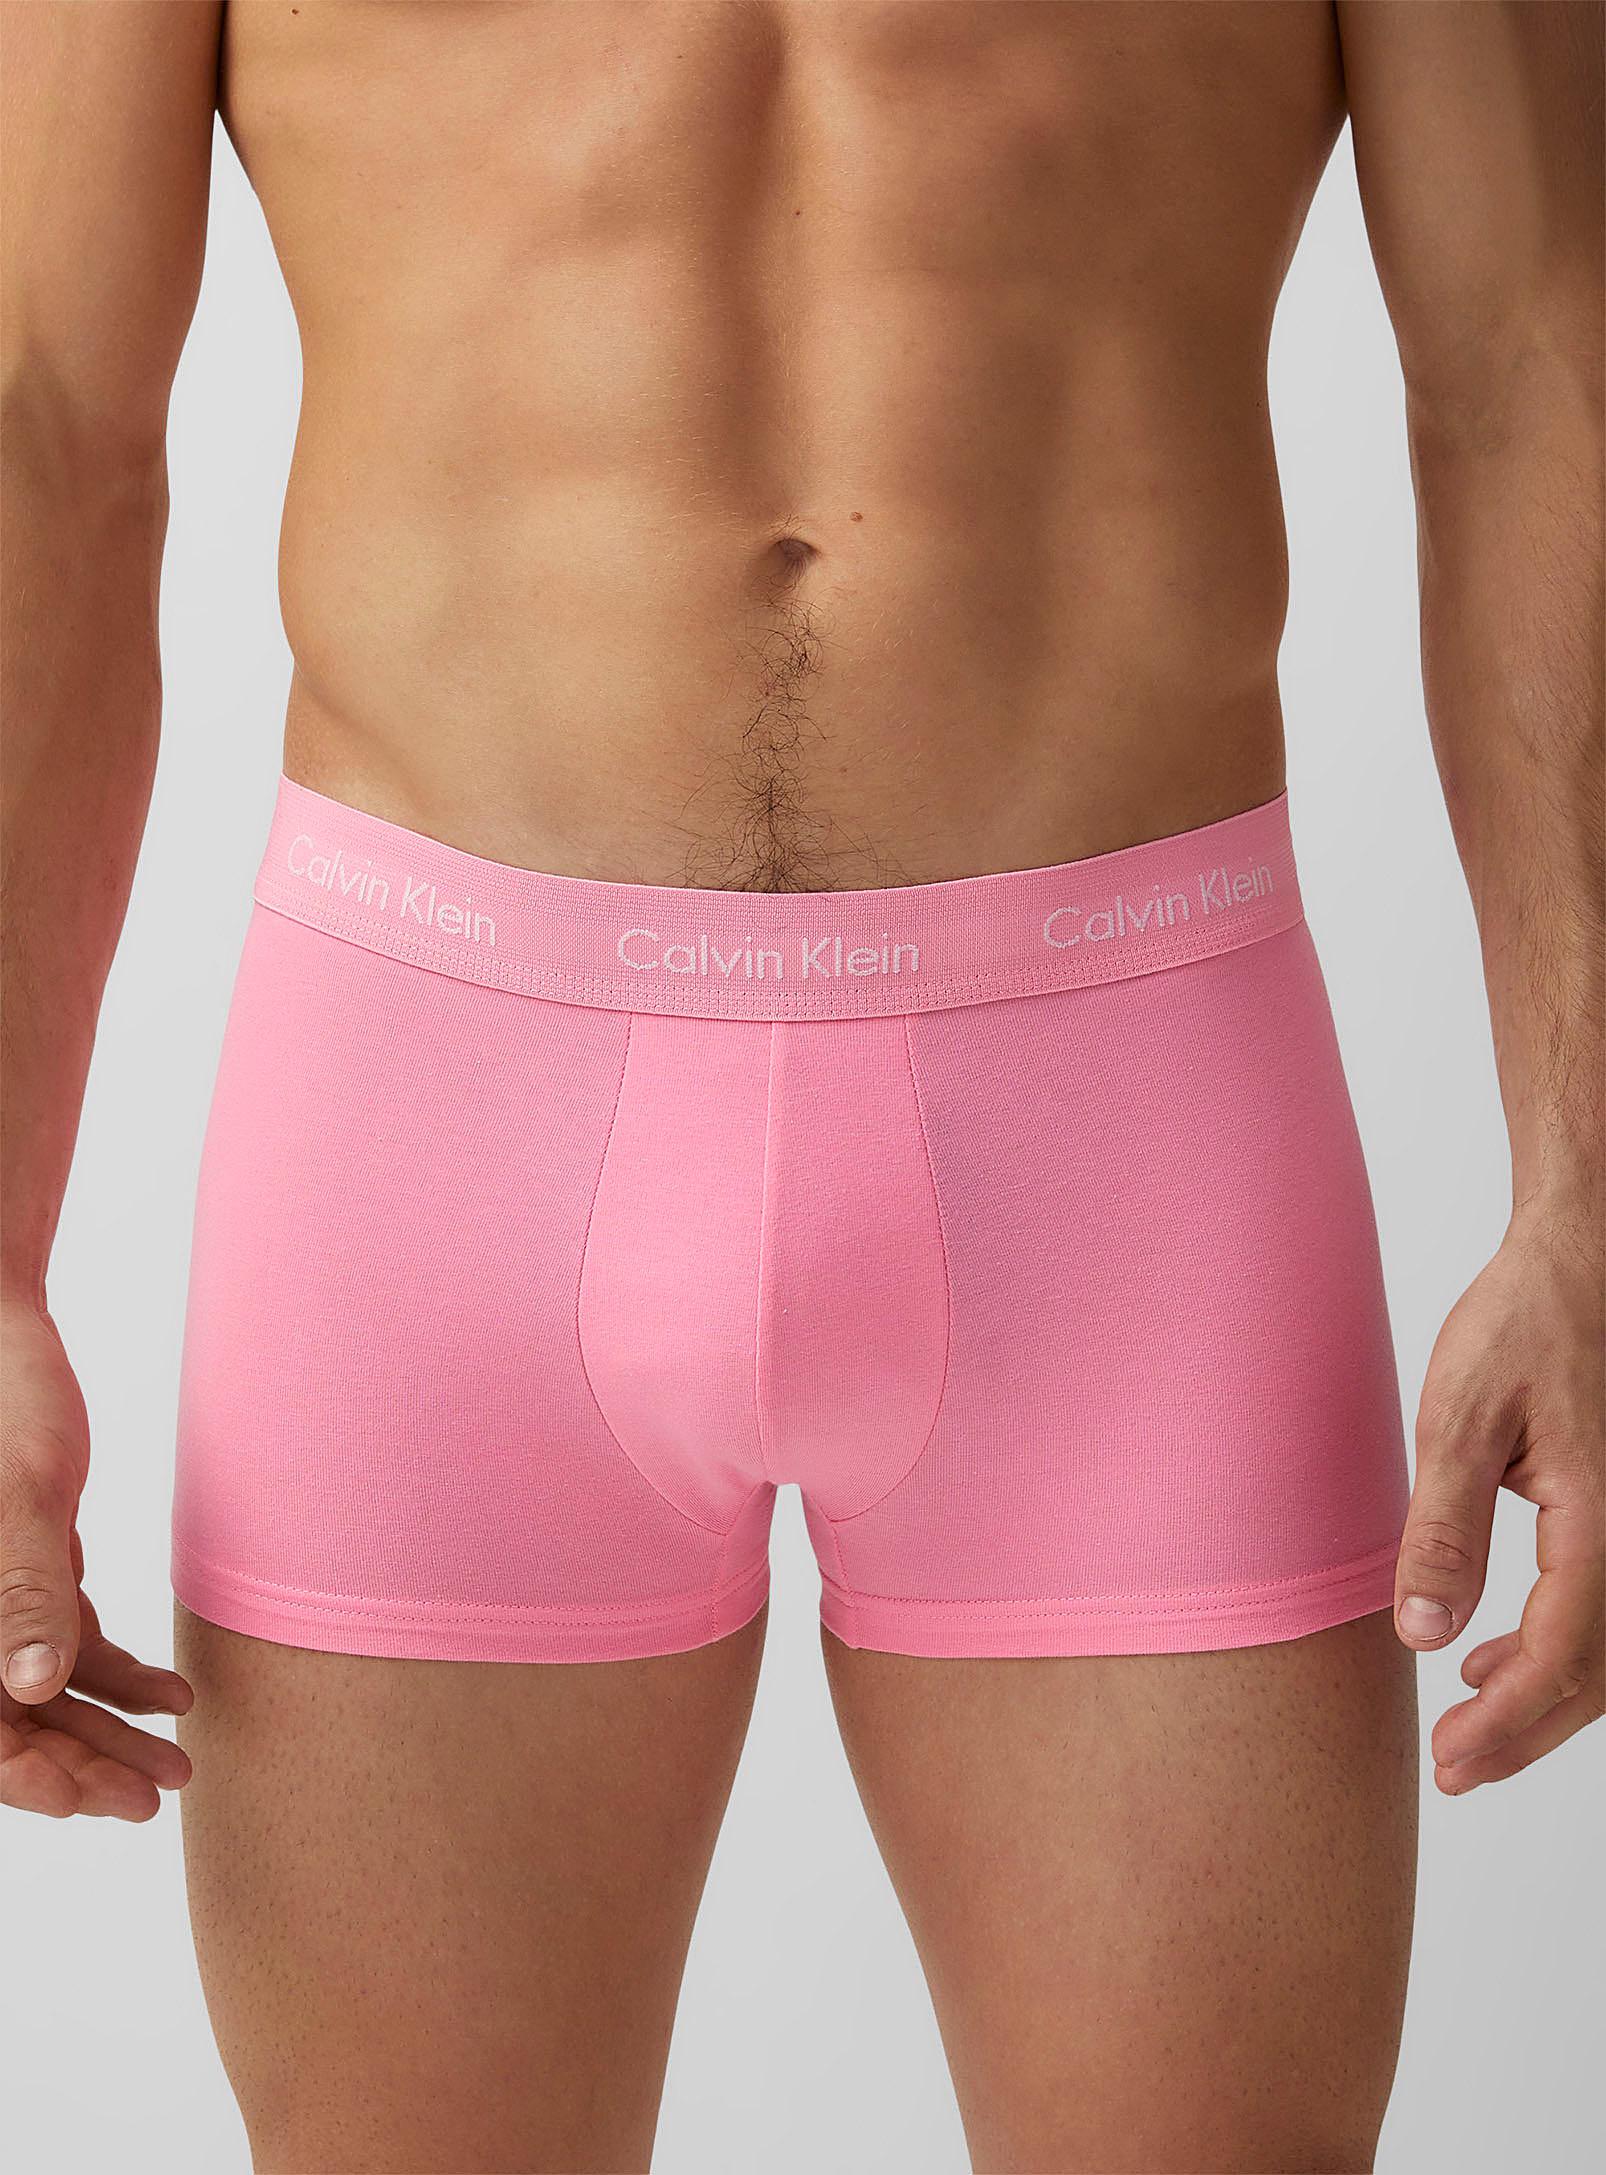 Calvin Klein Solid Pop in Pink for Men